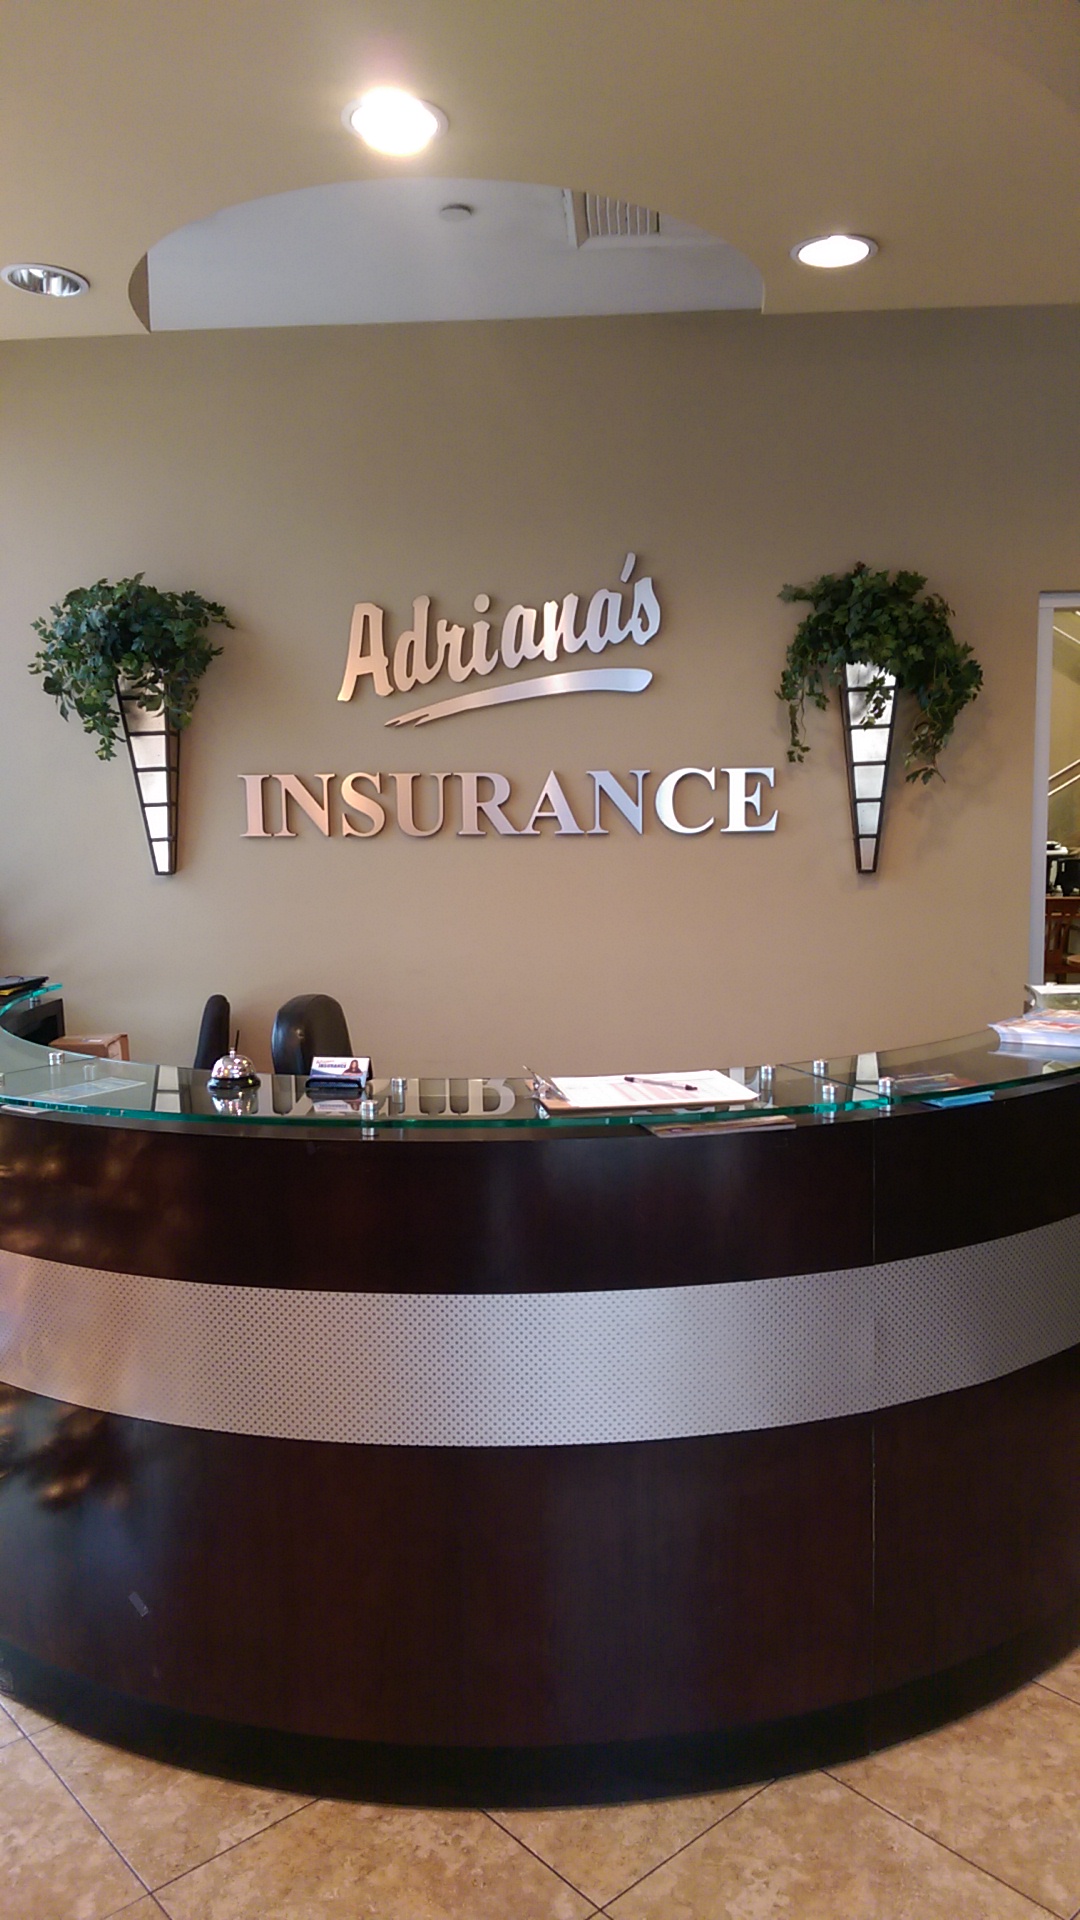 Adrianas Insurance Services